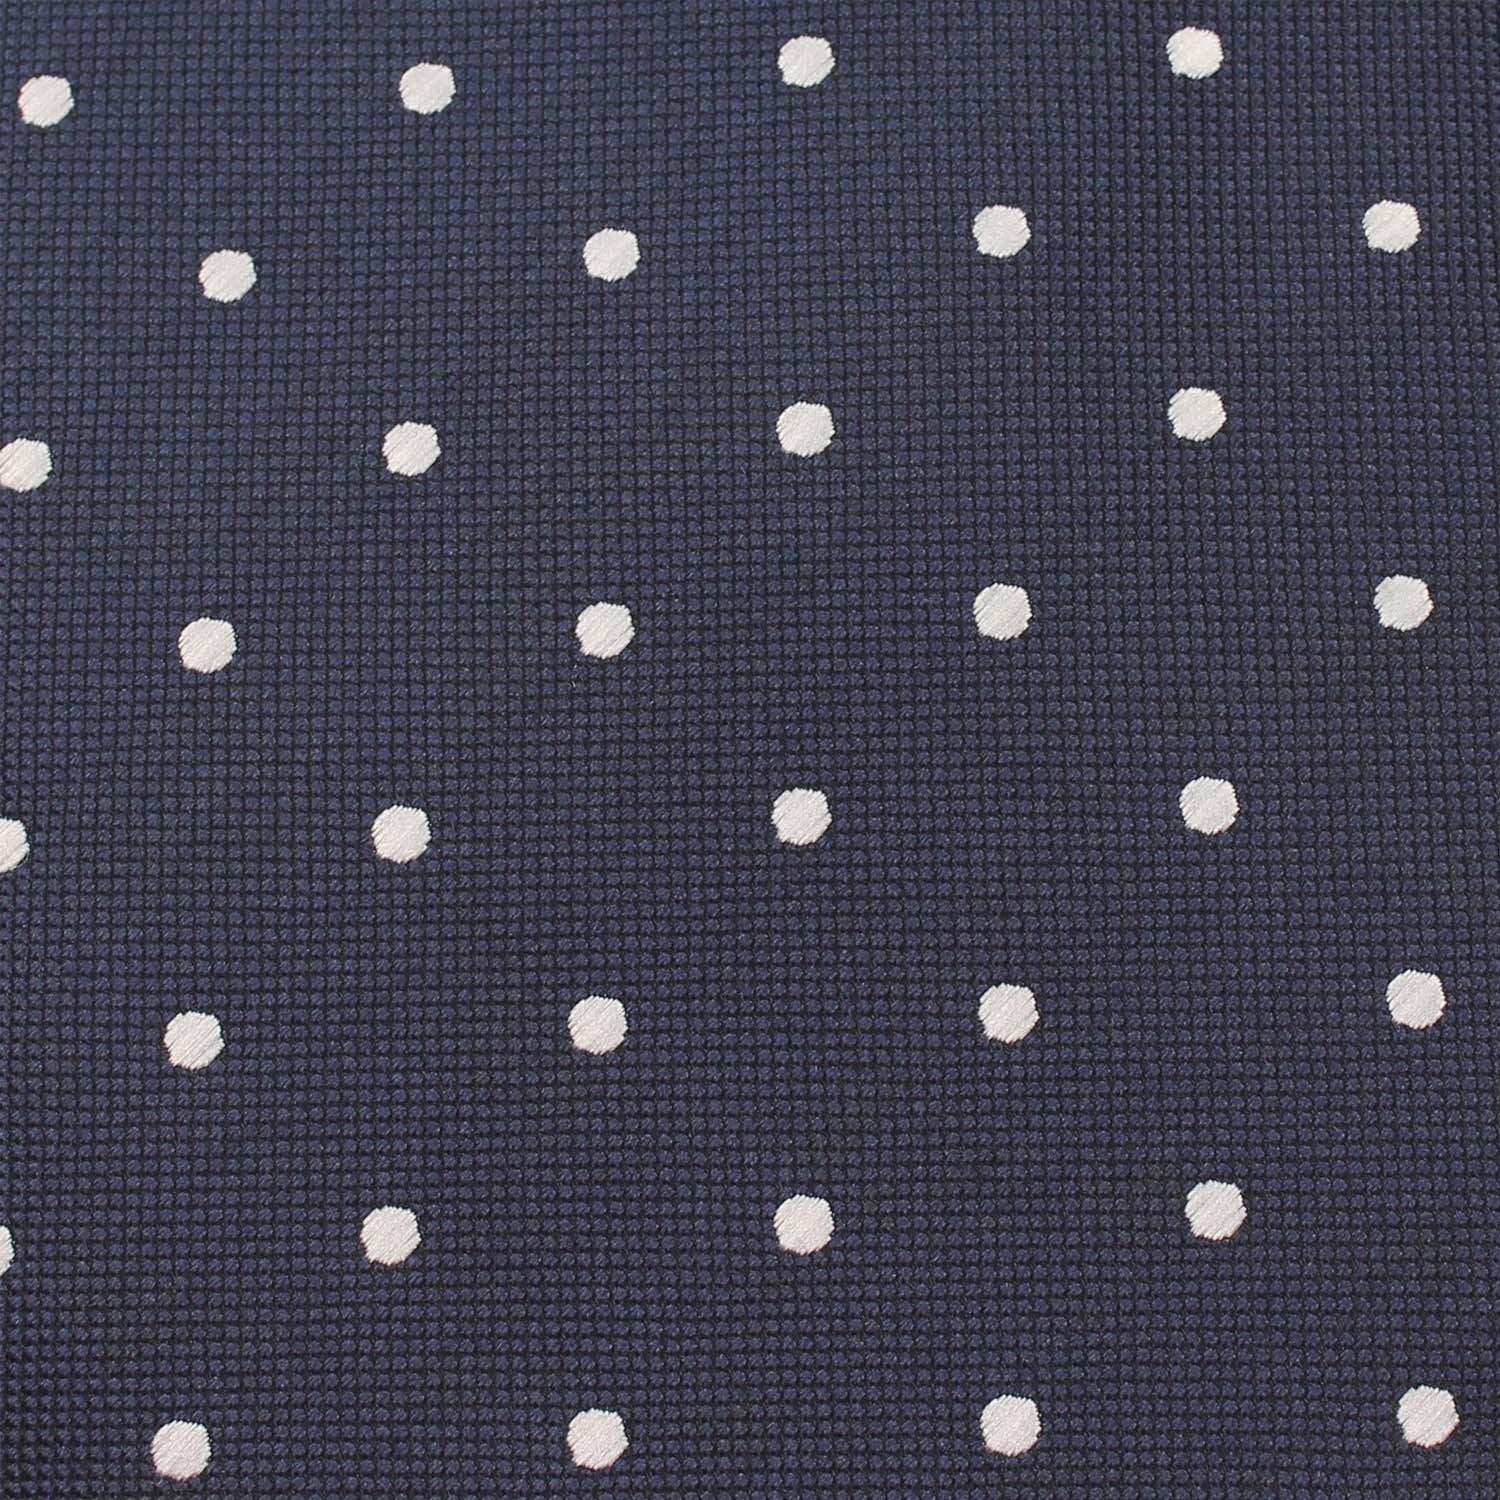 Navy Blue with White Polka Dots Fabric Self Tie Diamond Tip Bow Tie X325